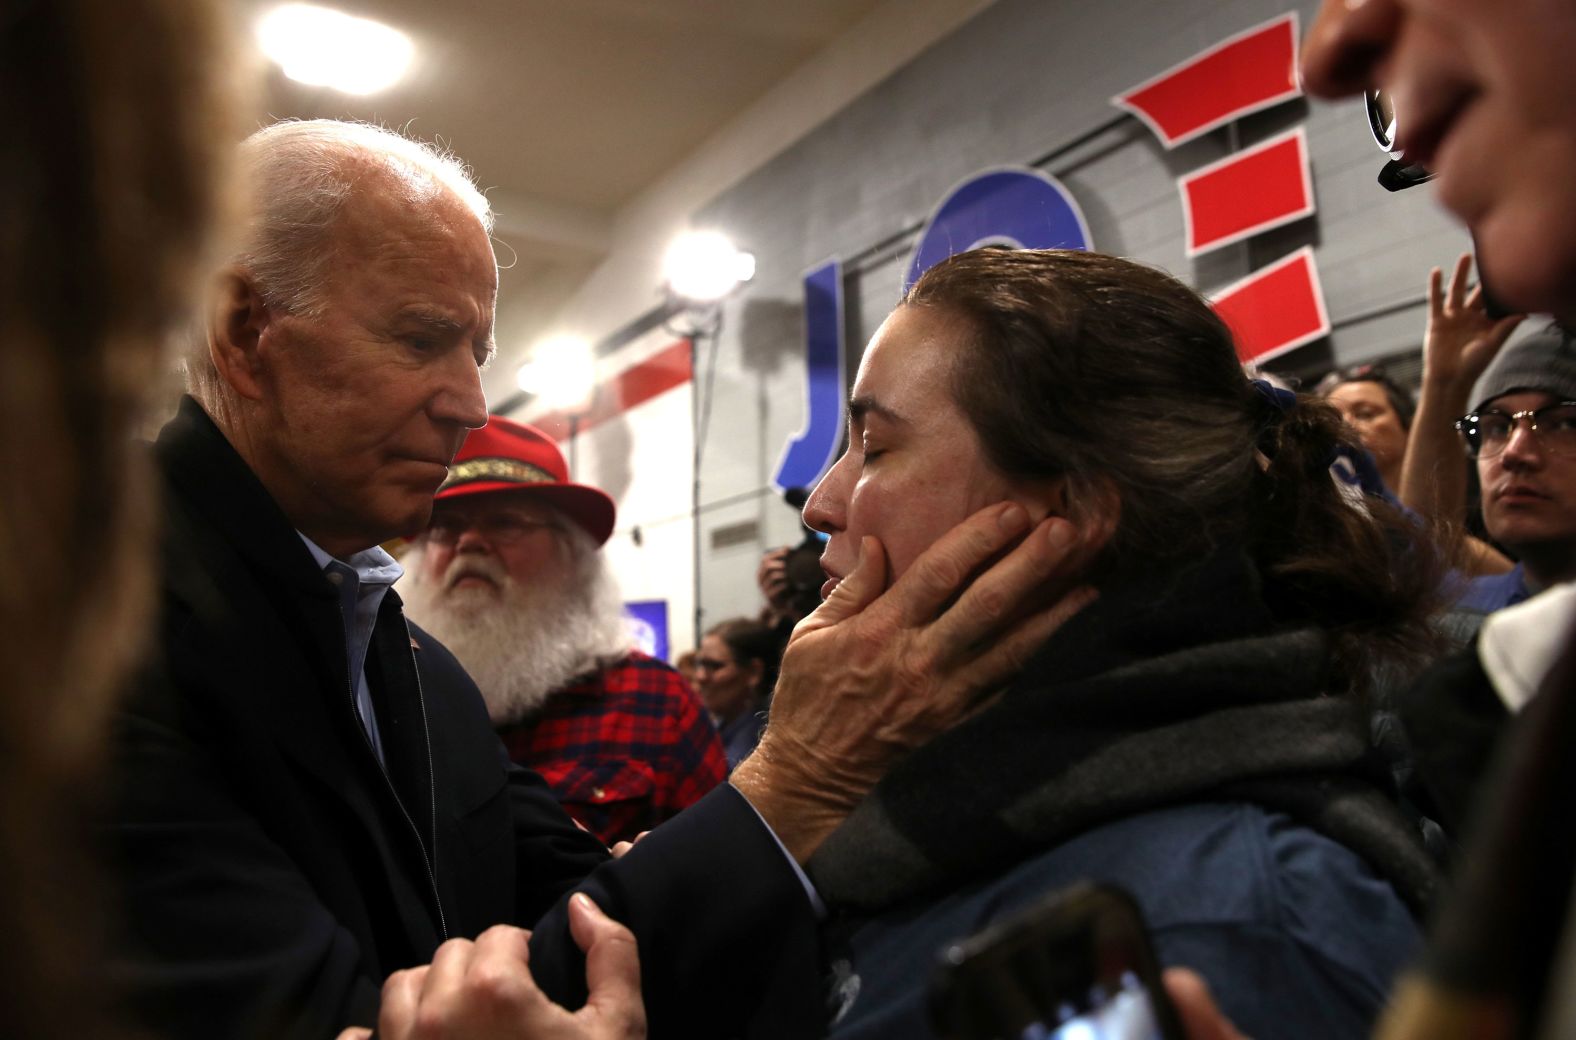 Biden greets a voter in Cedar Rapids on February 1.